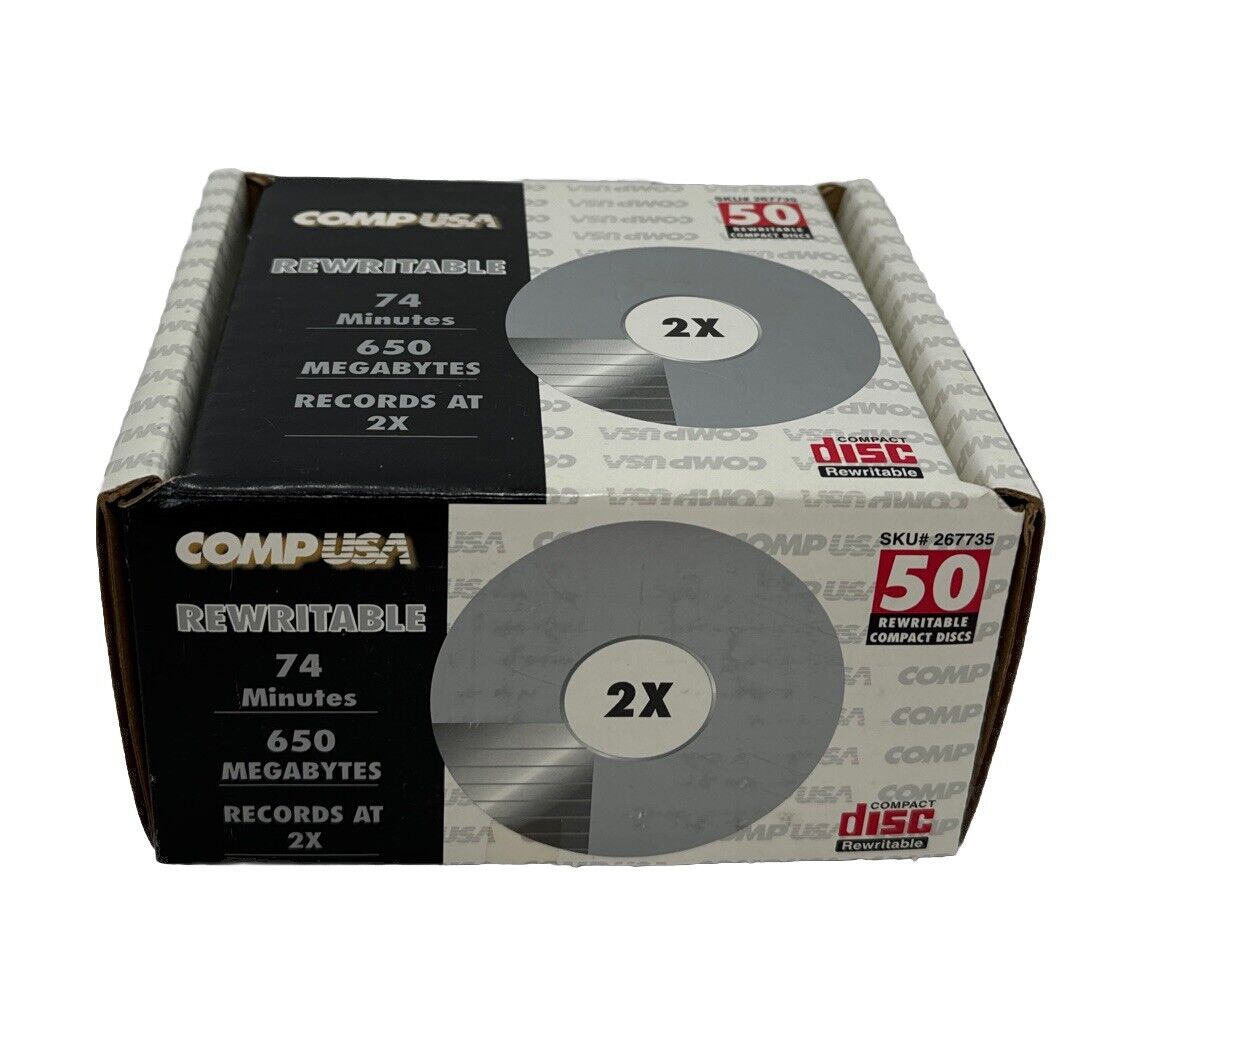 COMP USA 2X Rewritable 50 CDs 74 Minutes 650 Megabytes SKU# 267735 Sealed NOS